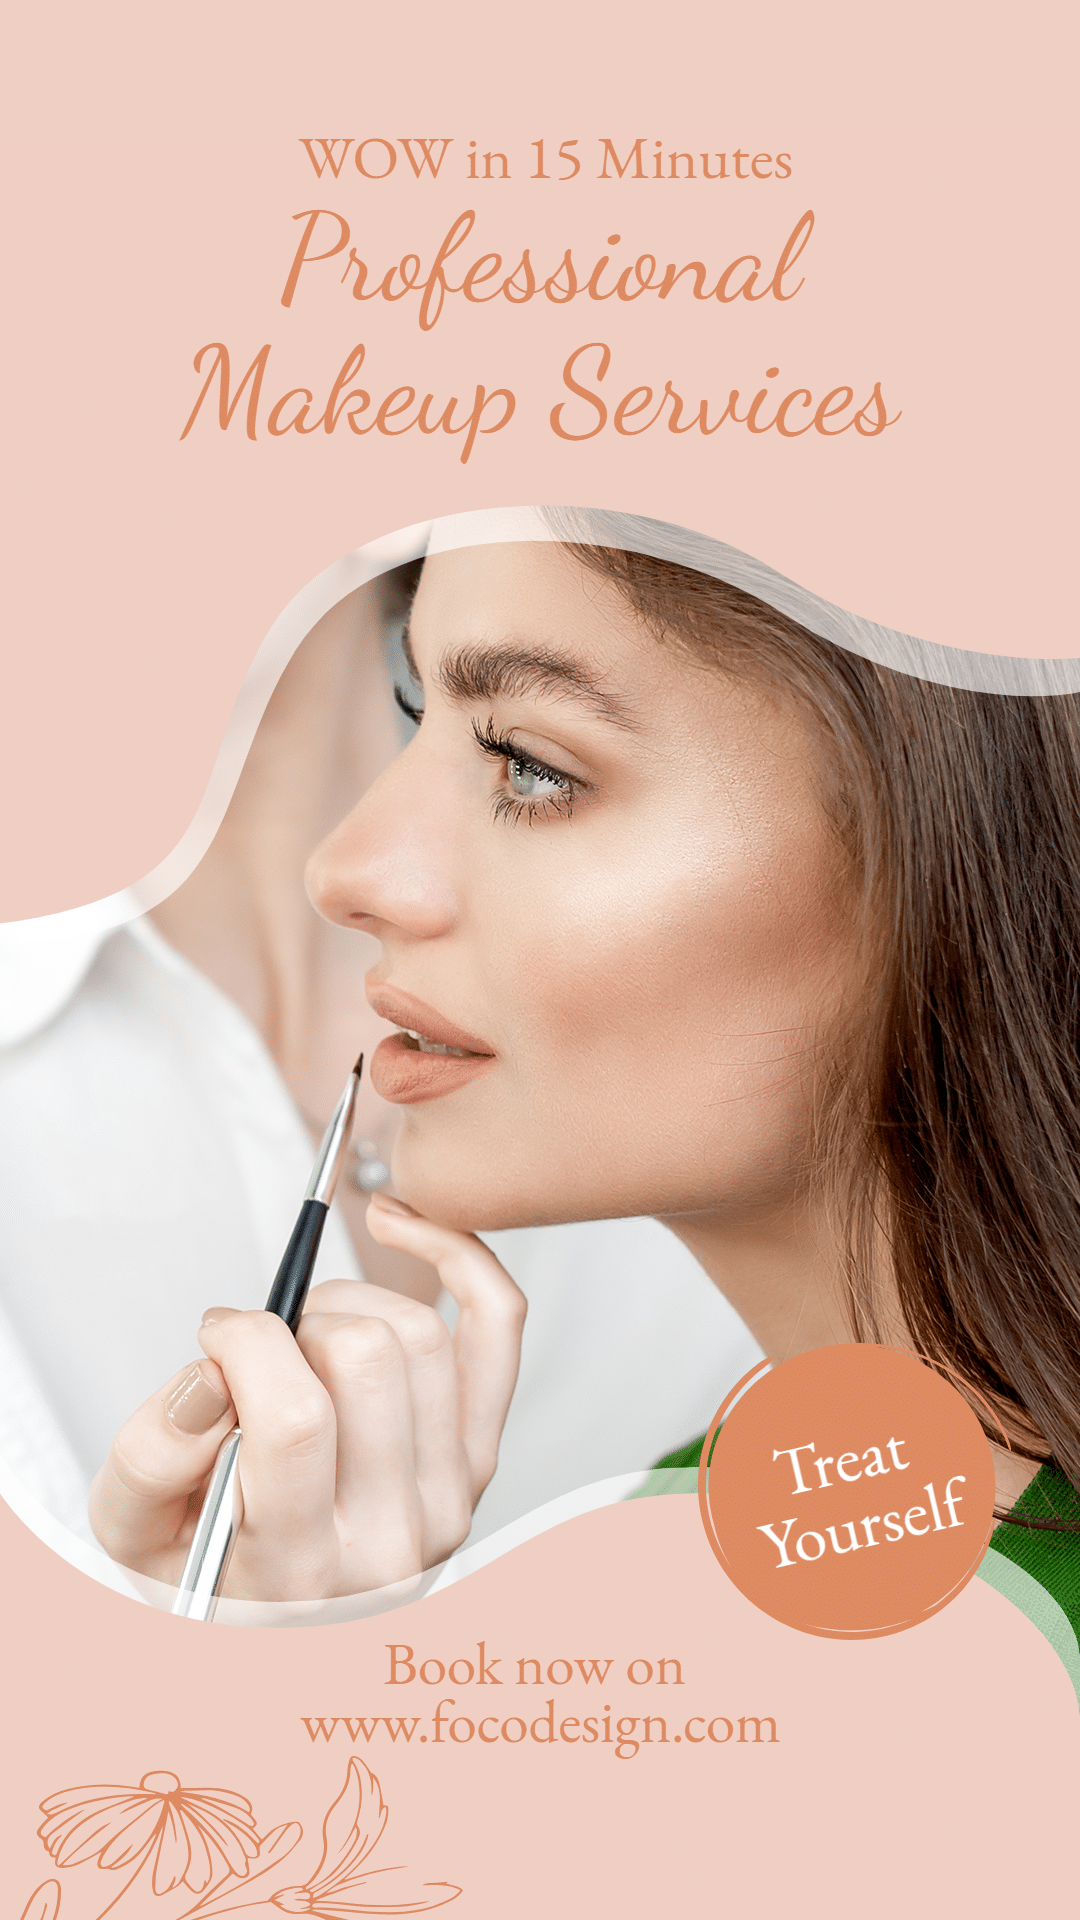 Professional Makeup Services Advertisement Ecommerce Story预览效果